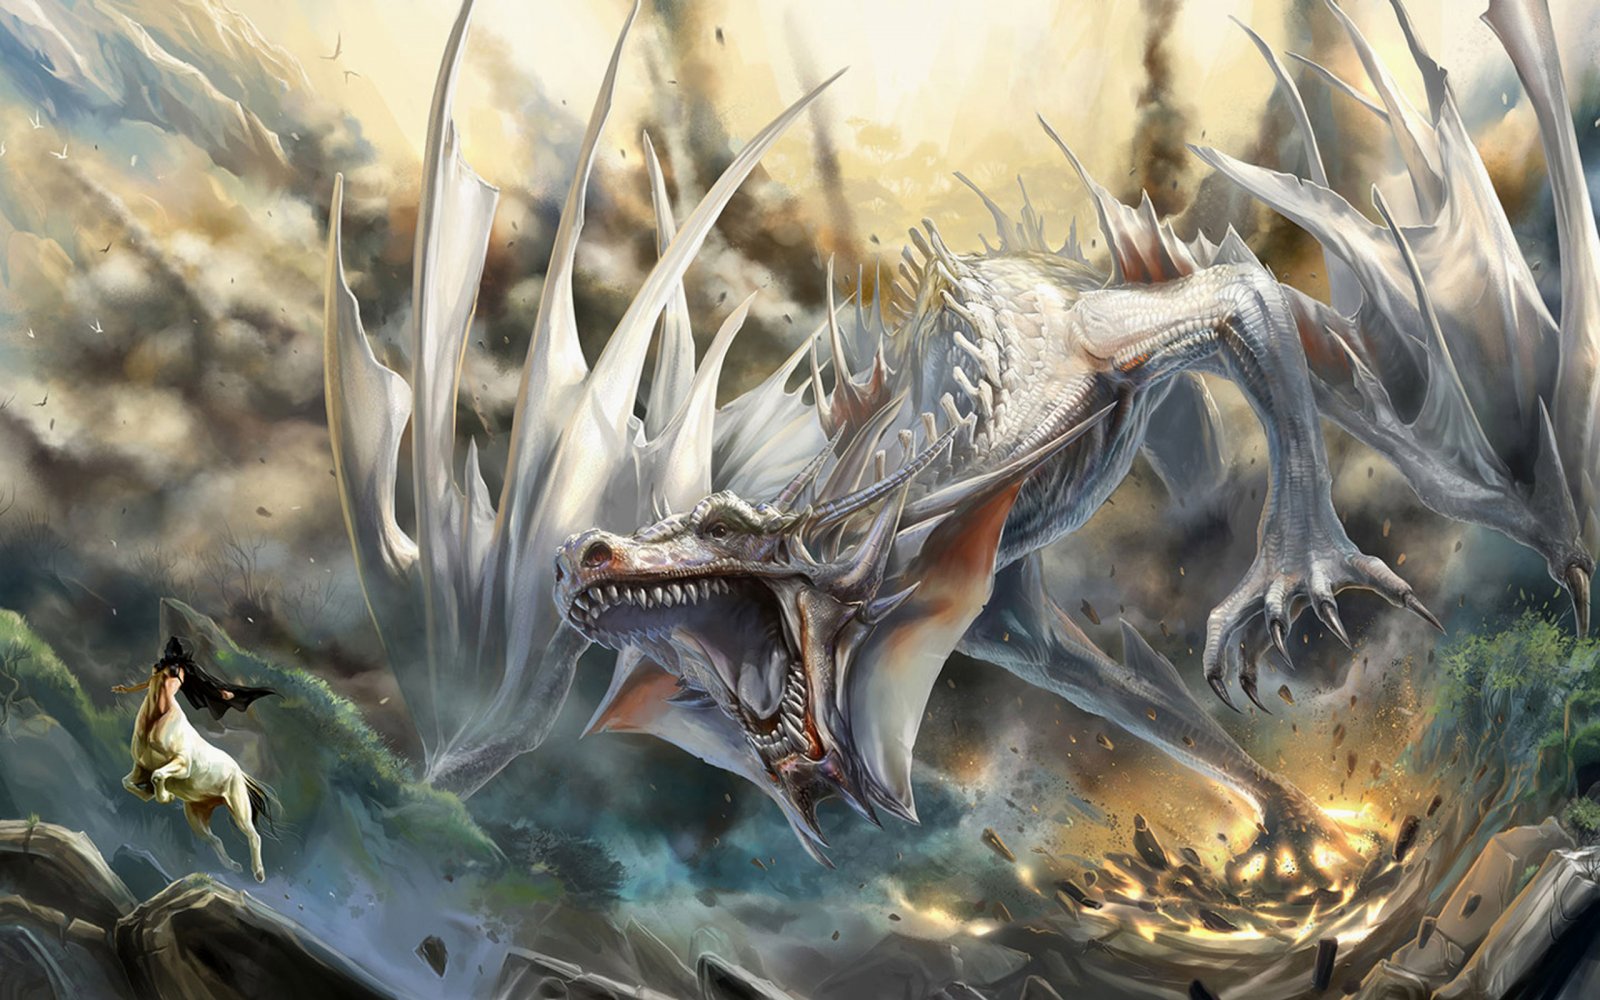 dragones wallpaper hd,dragon,cg artwork,fictional character,mythology,mythical creature